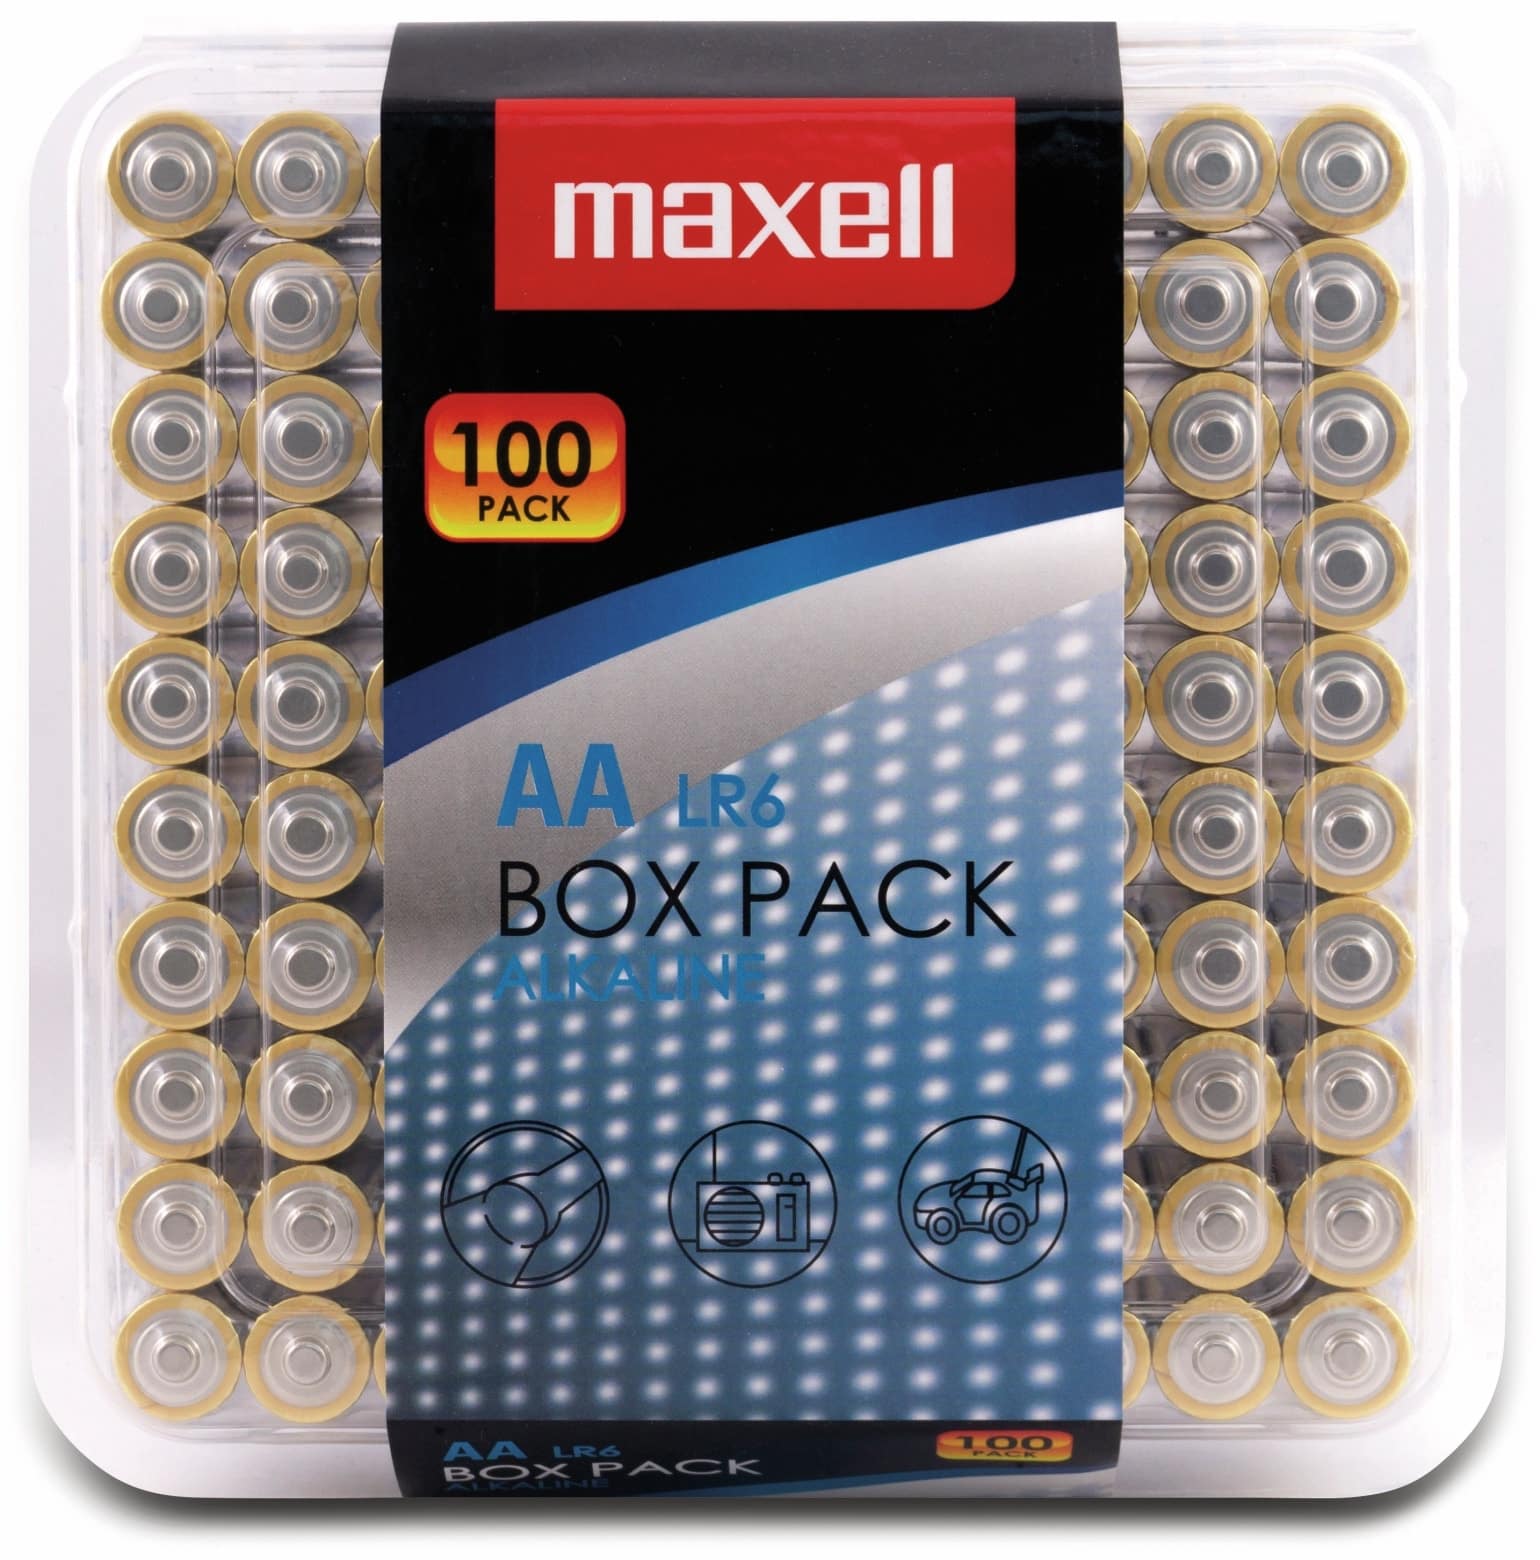 MAXELL Mignon-Batterie Alkaline, AA, LR6, 100er Box